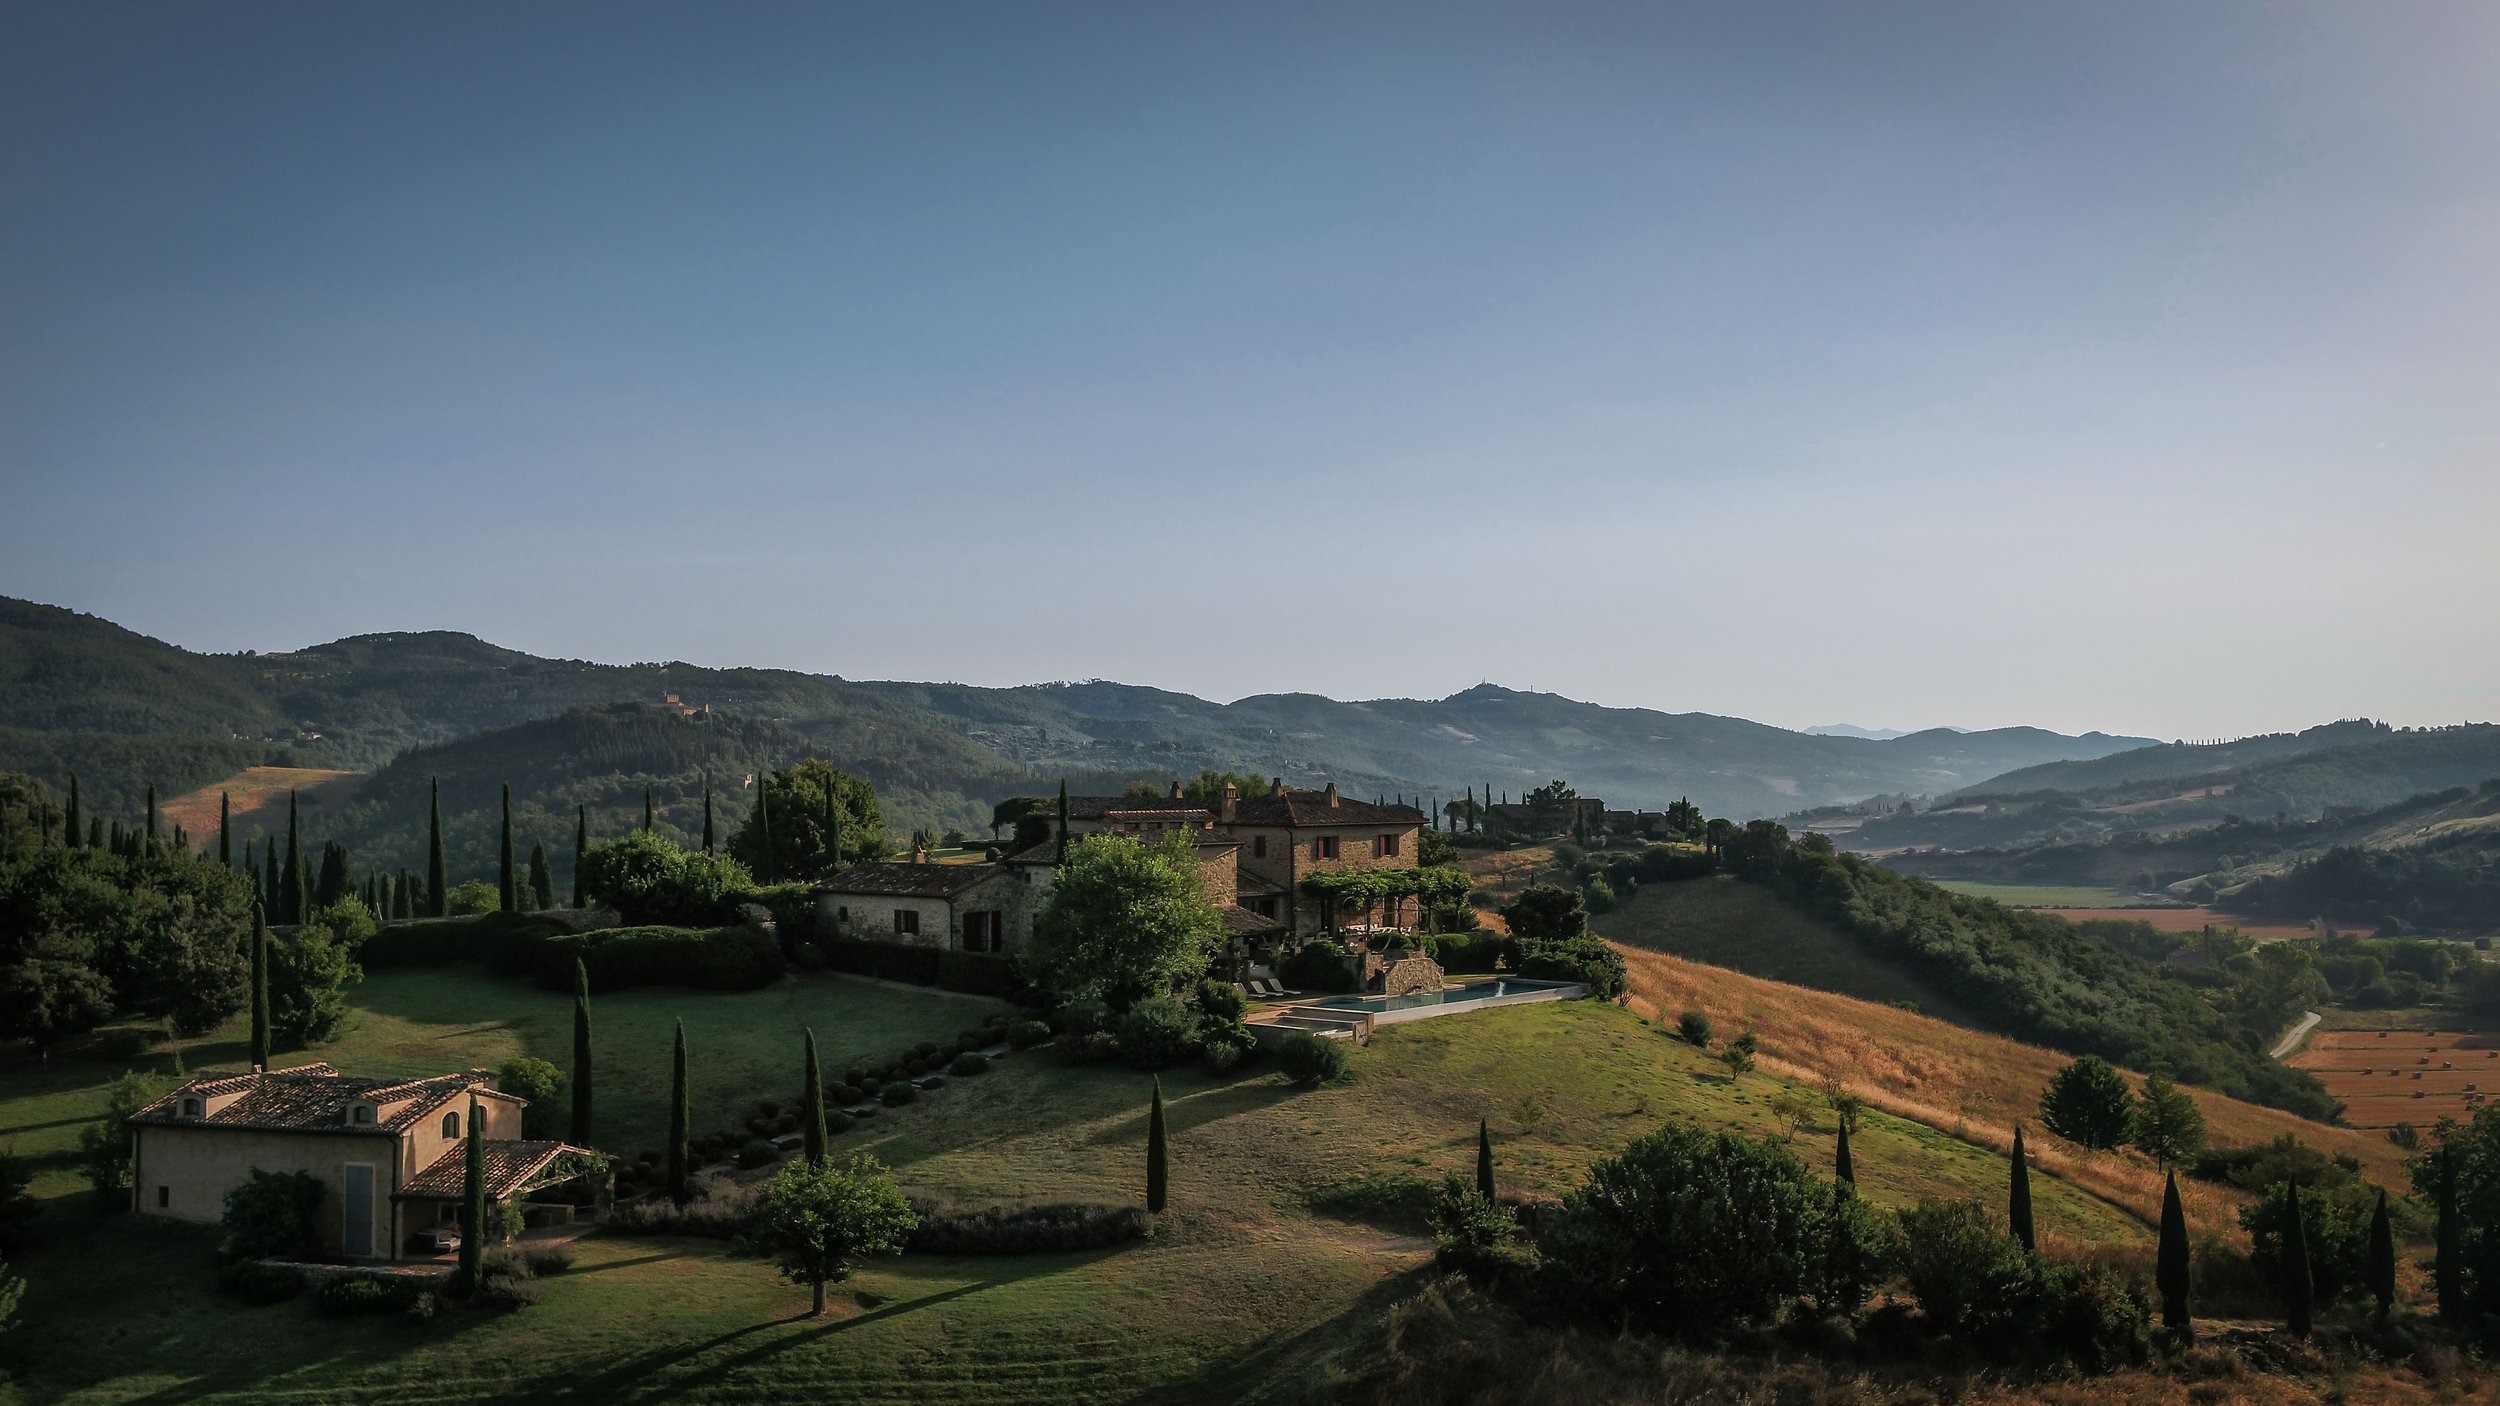 Francis York Exclusive Luxury Villa Rental in Umbria, Italy 6.jpg